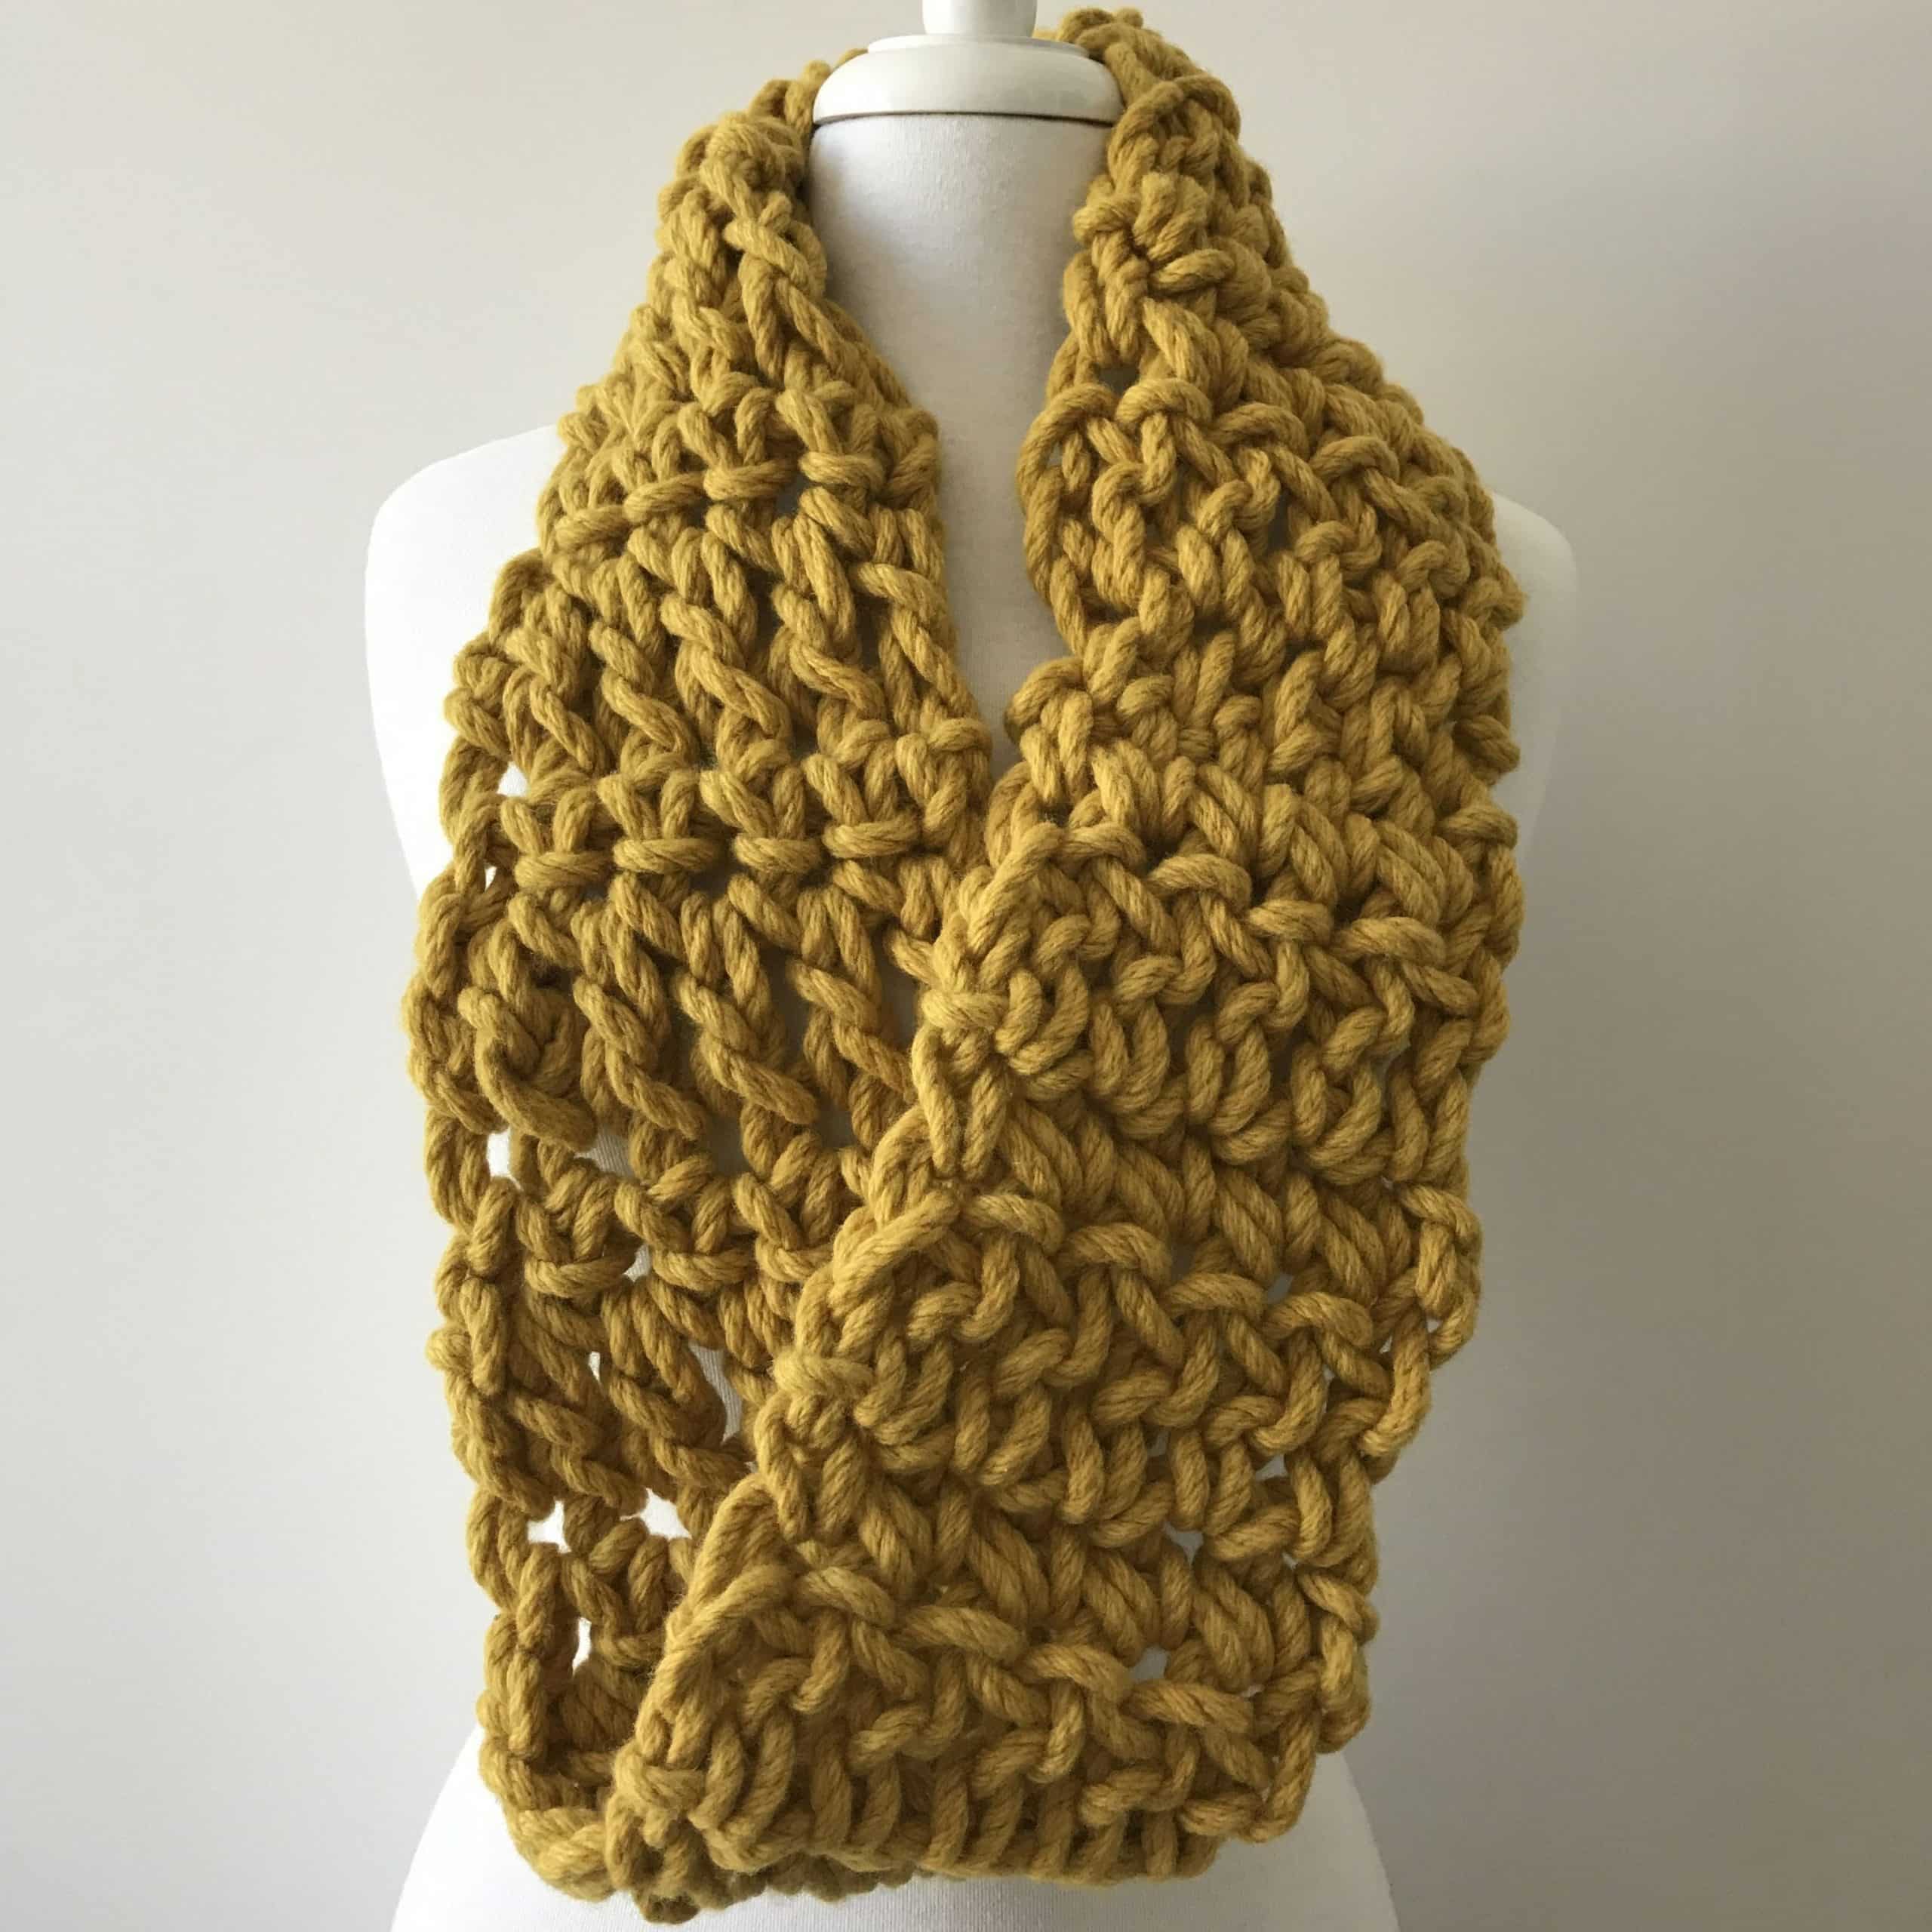 How to crochet a chunky cowl workshop with Australian merino wool | Homelea Lass